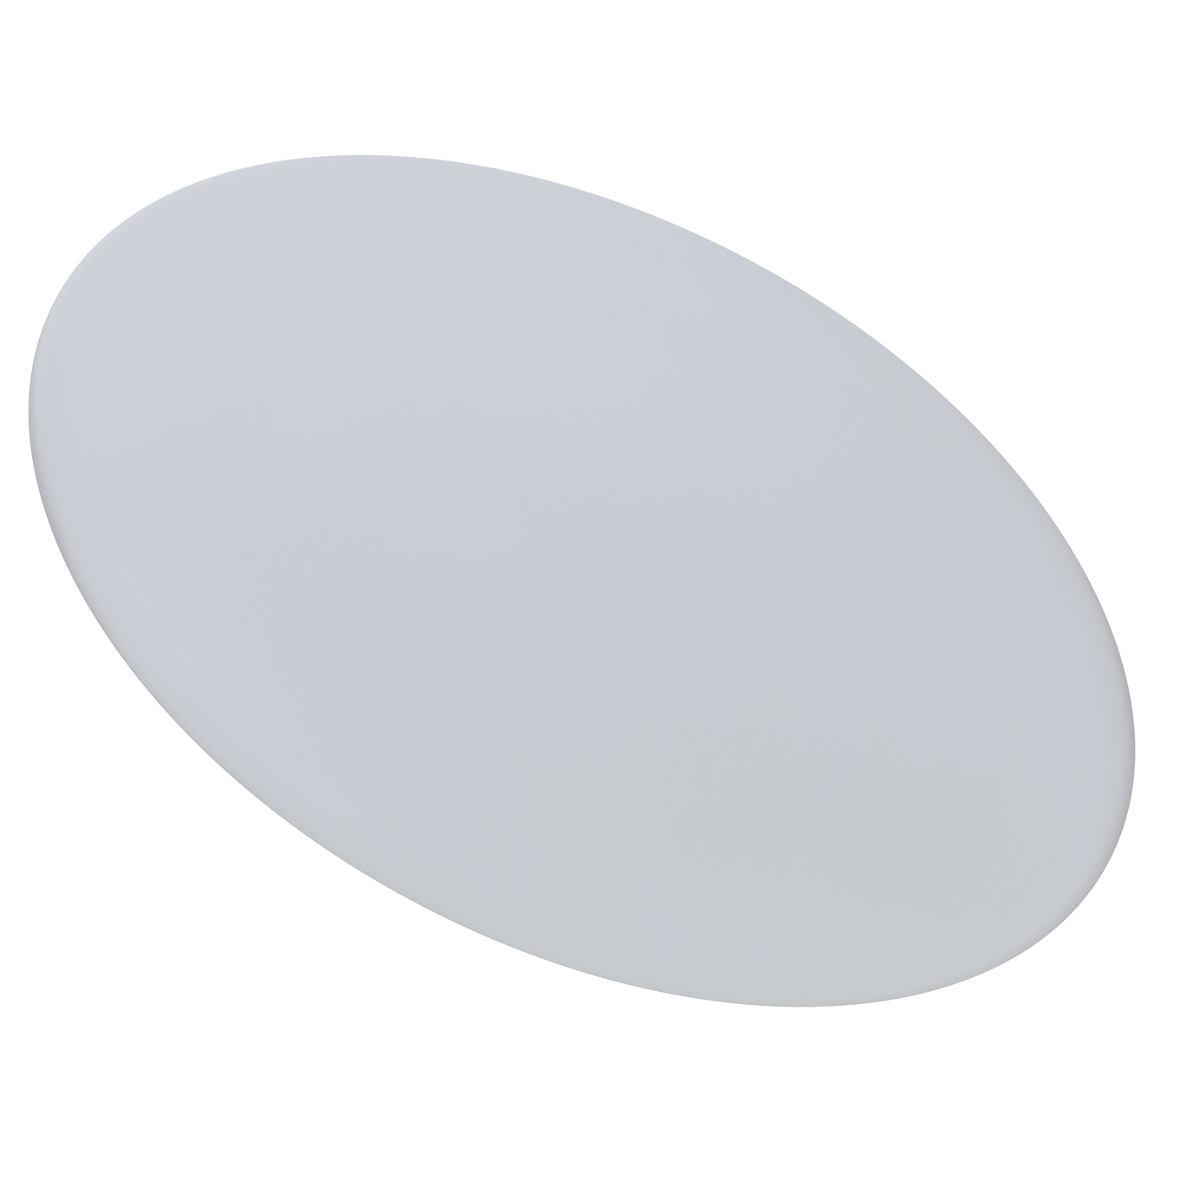 Ovale Opalglas-Deckenleuchte OVALA, 39 / 50 cm: Größe S